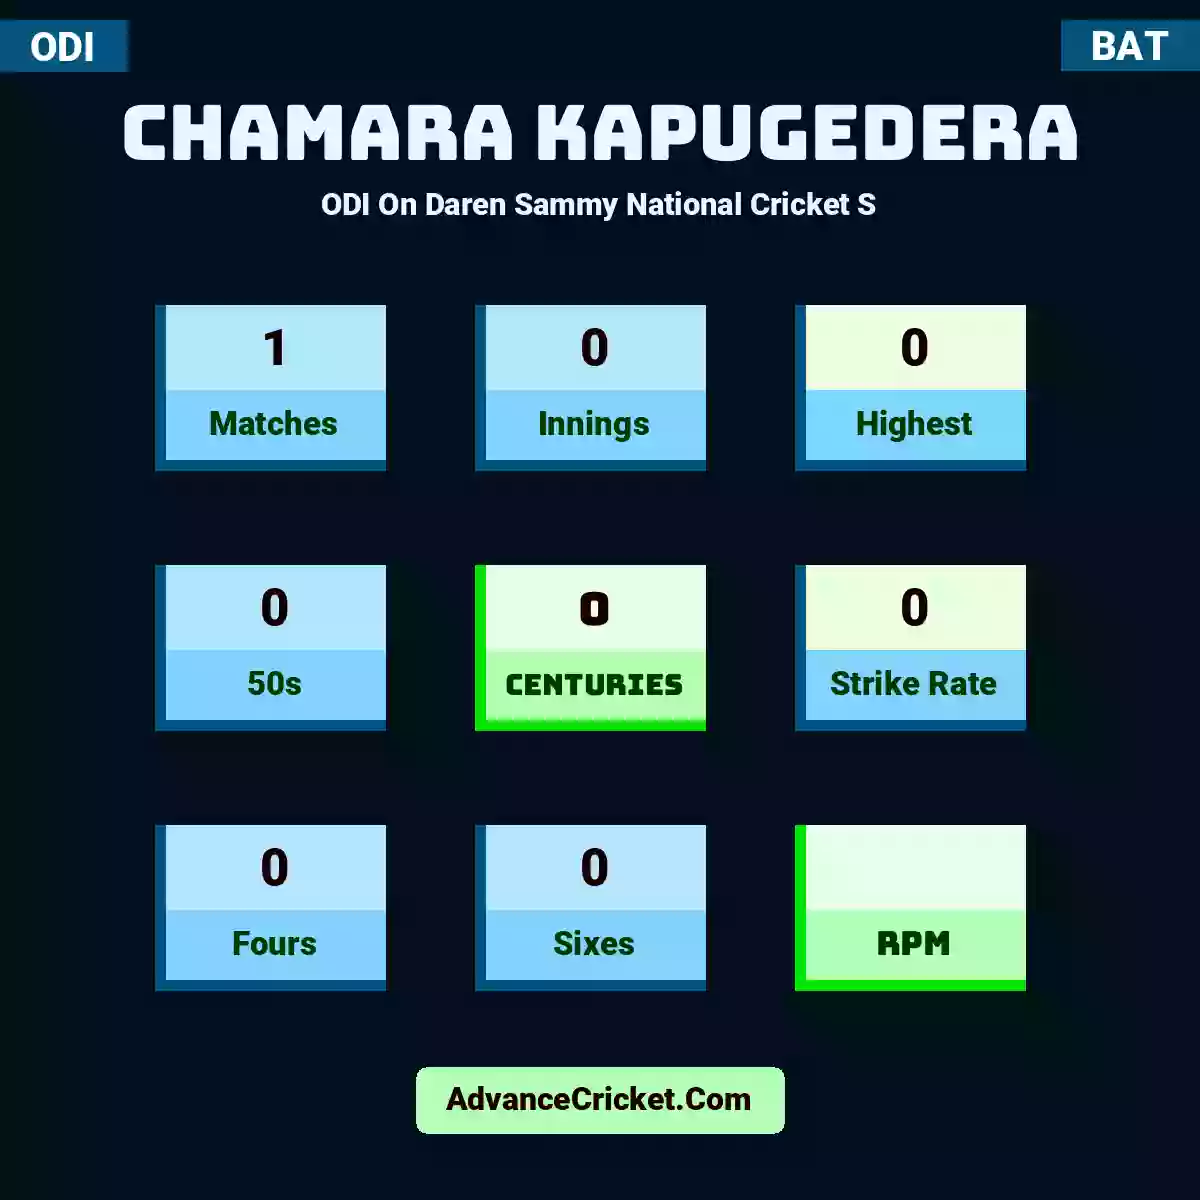 Chamara Kapugedera ODI  On Daren Sammy National Cricket S, Chamara Kapugedera played 1 matches, scored 0 runs as highest, 0 half-centuries, and 0 centuries, with a strike rate of 0. C.Kapugedera hit 0 fours and 0 sixes.